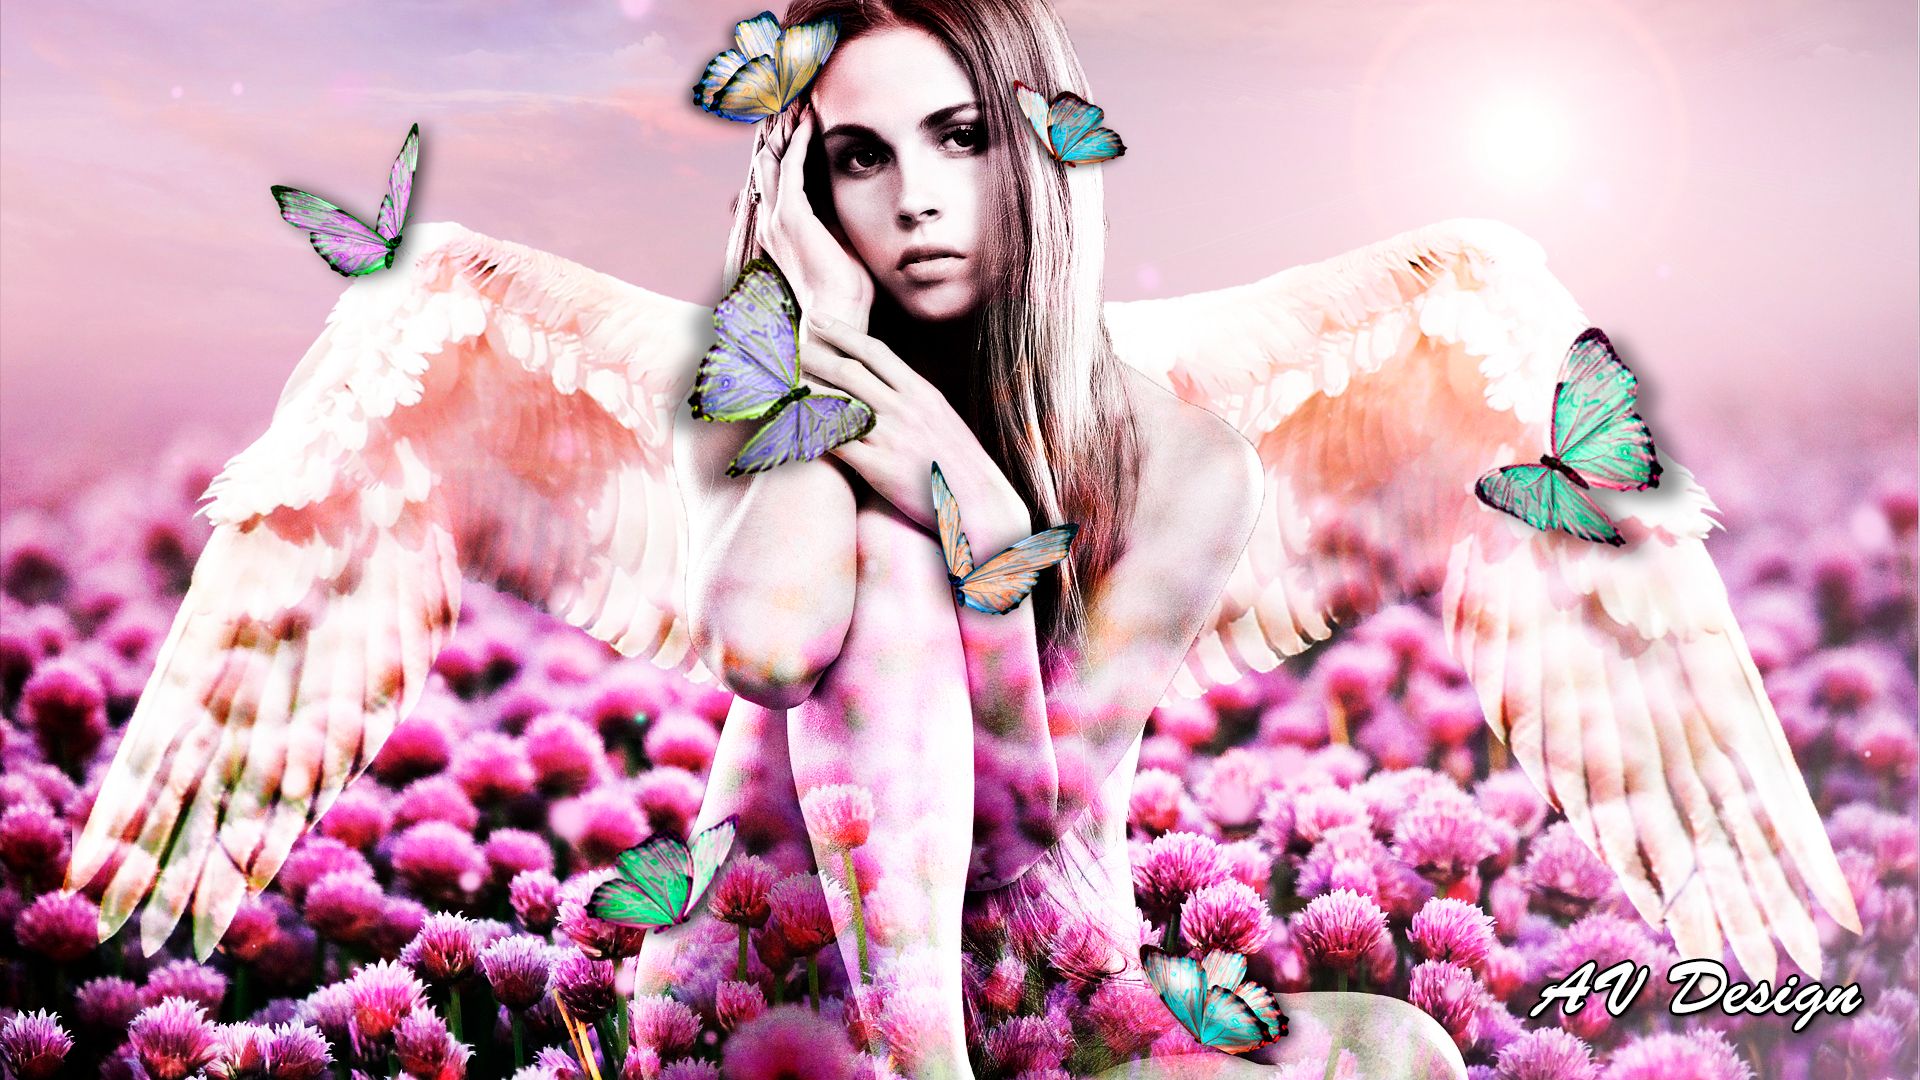 Angel de las mariposas 6.jpg